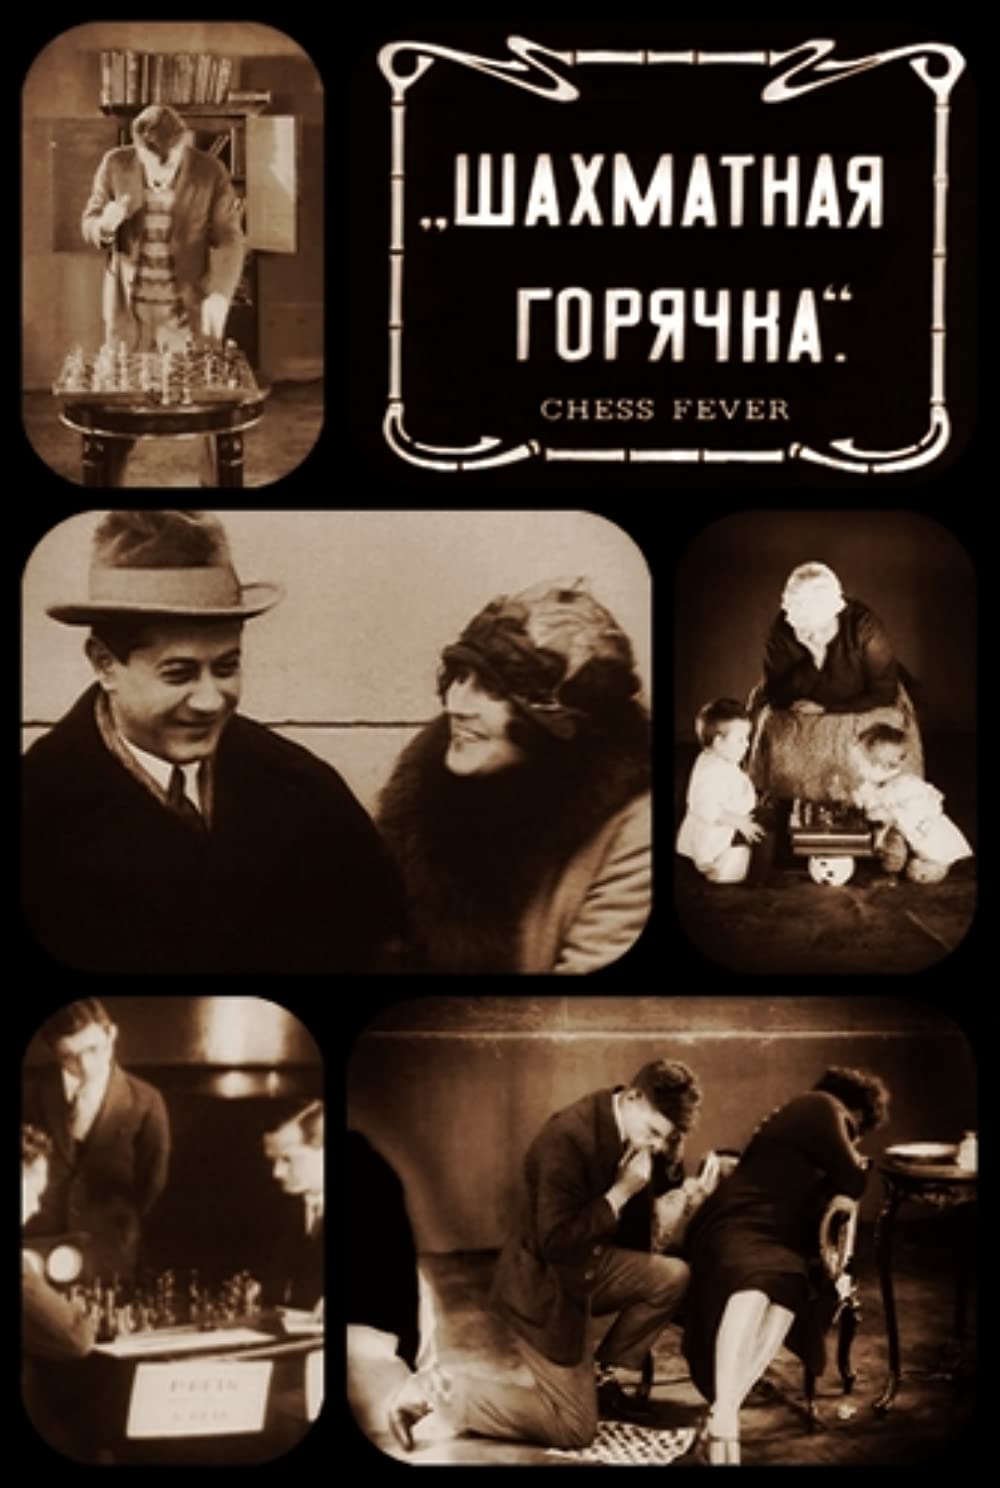 Filmbeschreibung zu Schachfieber (1925)